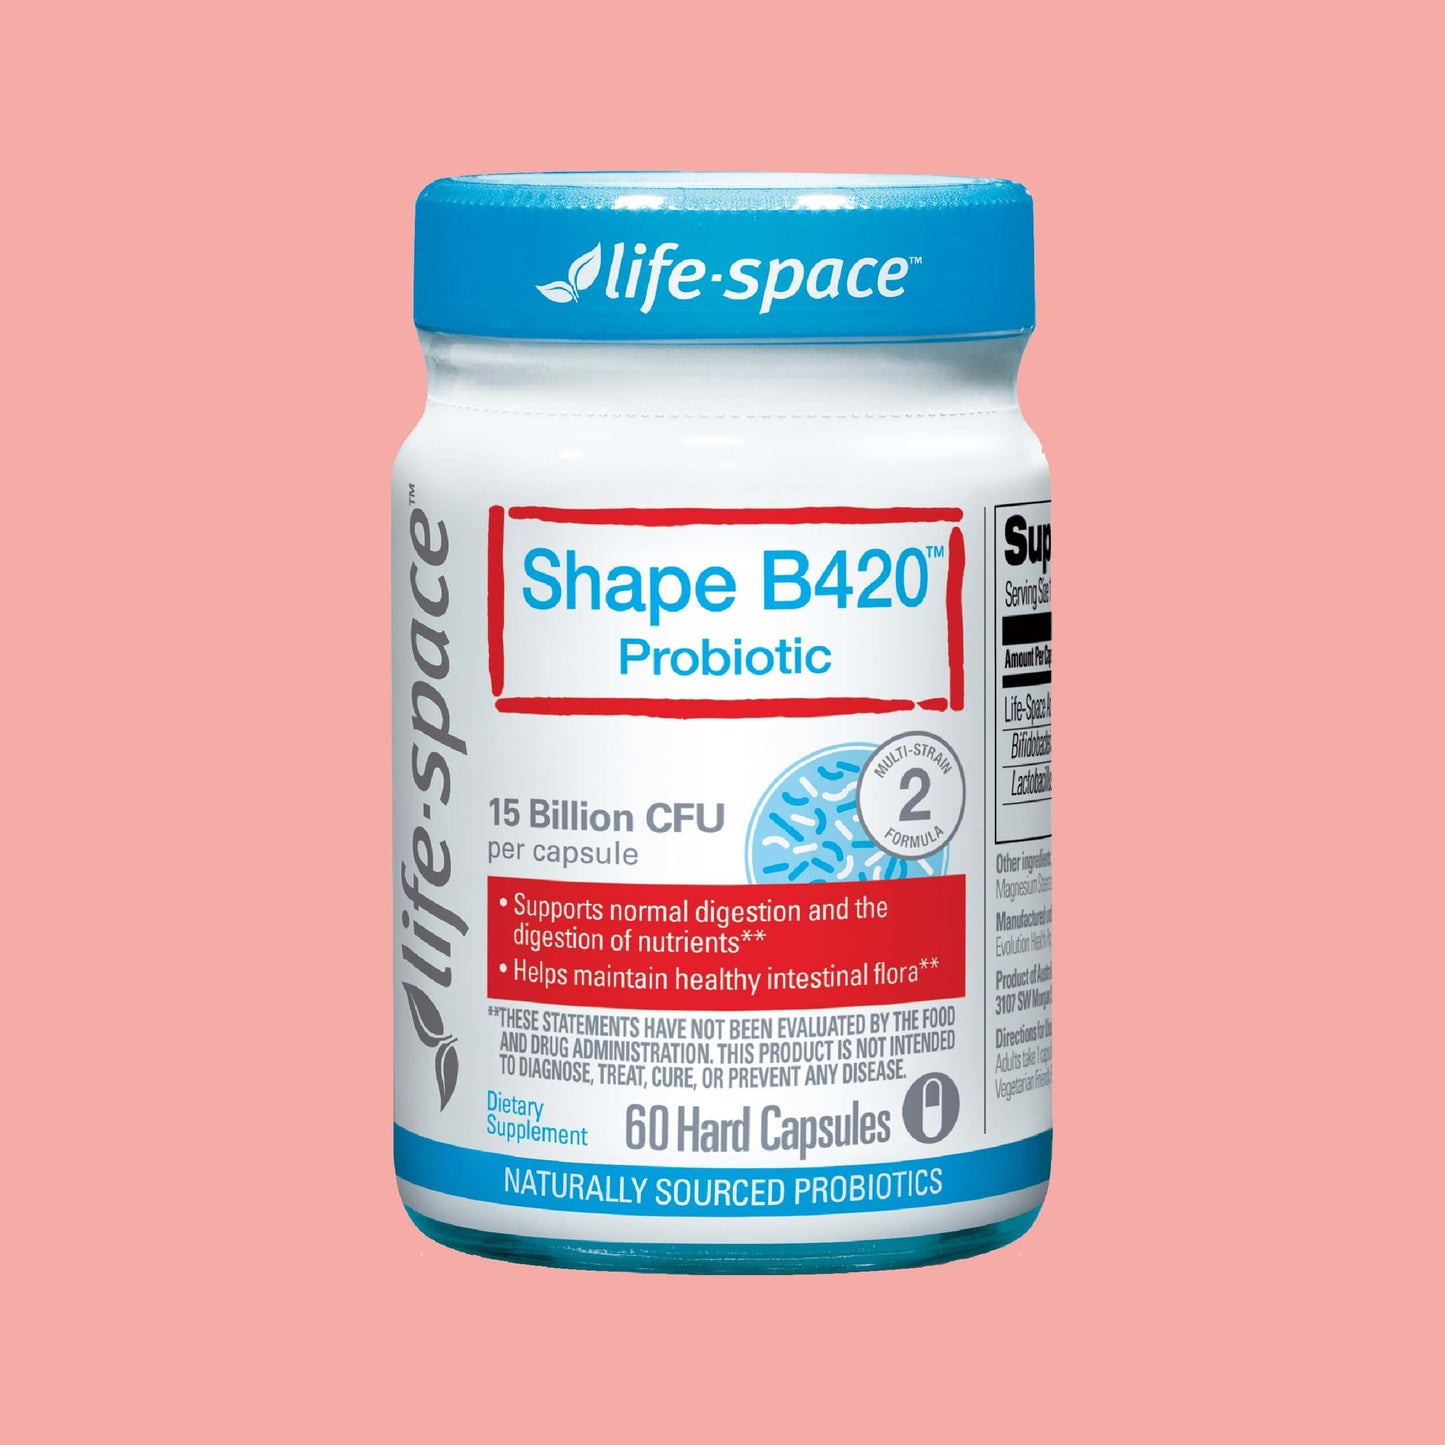 Shape B420™ Probiotic Life-Space US